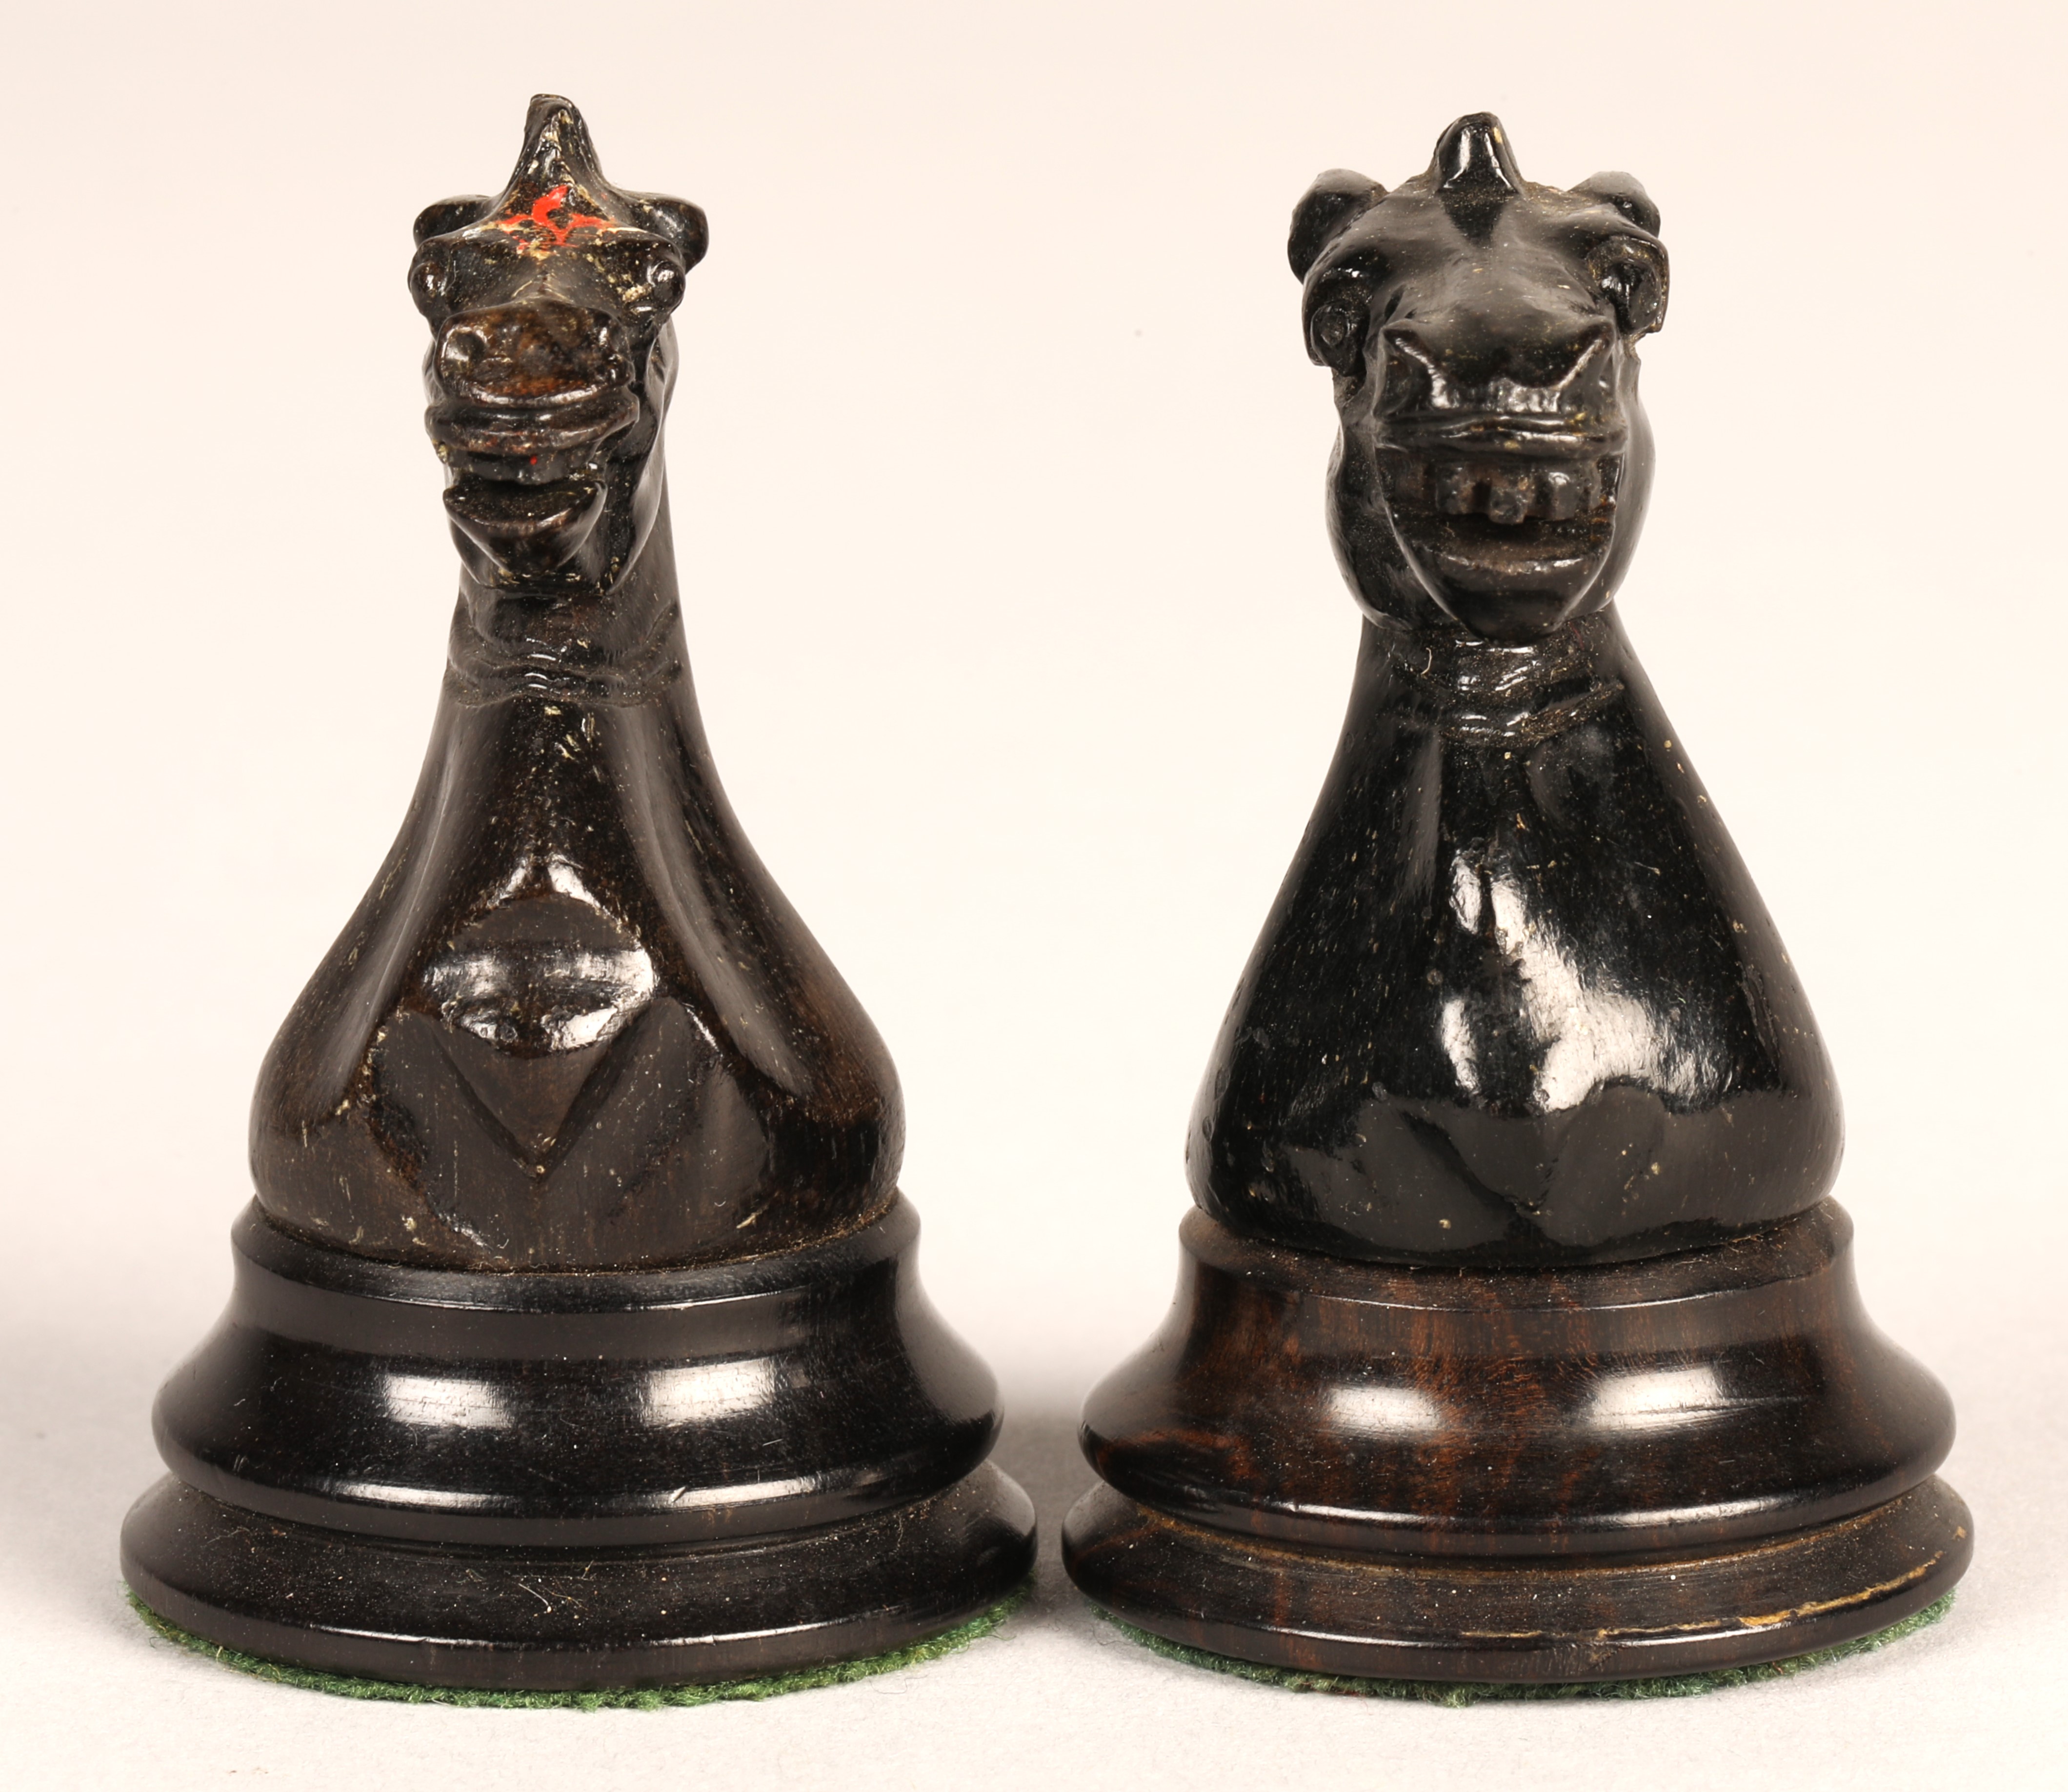 Jaques of London 19th century boxwood and ebony chess set - Image 12 of 24